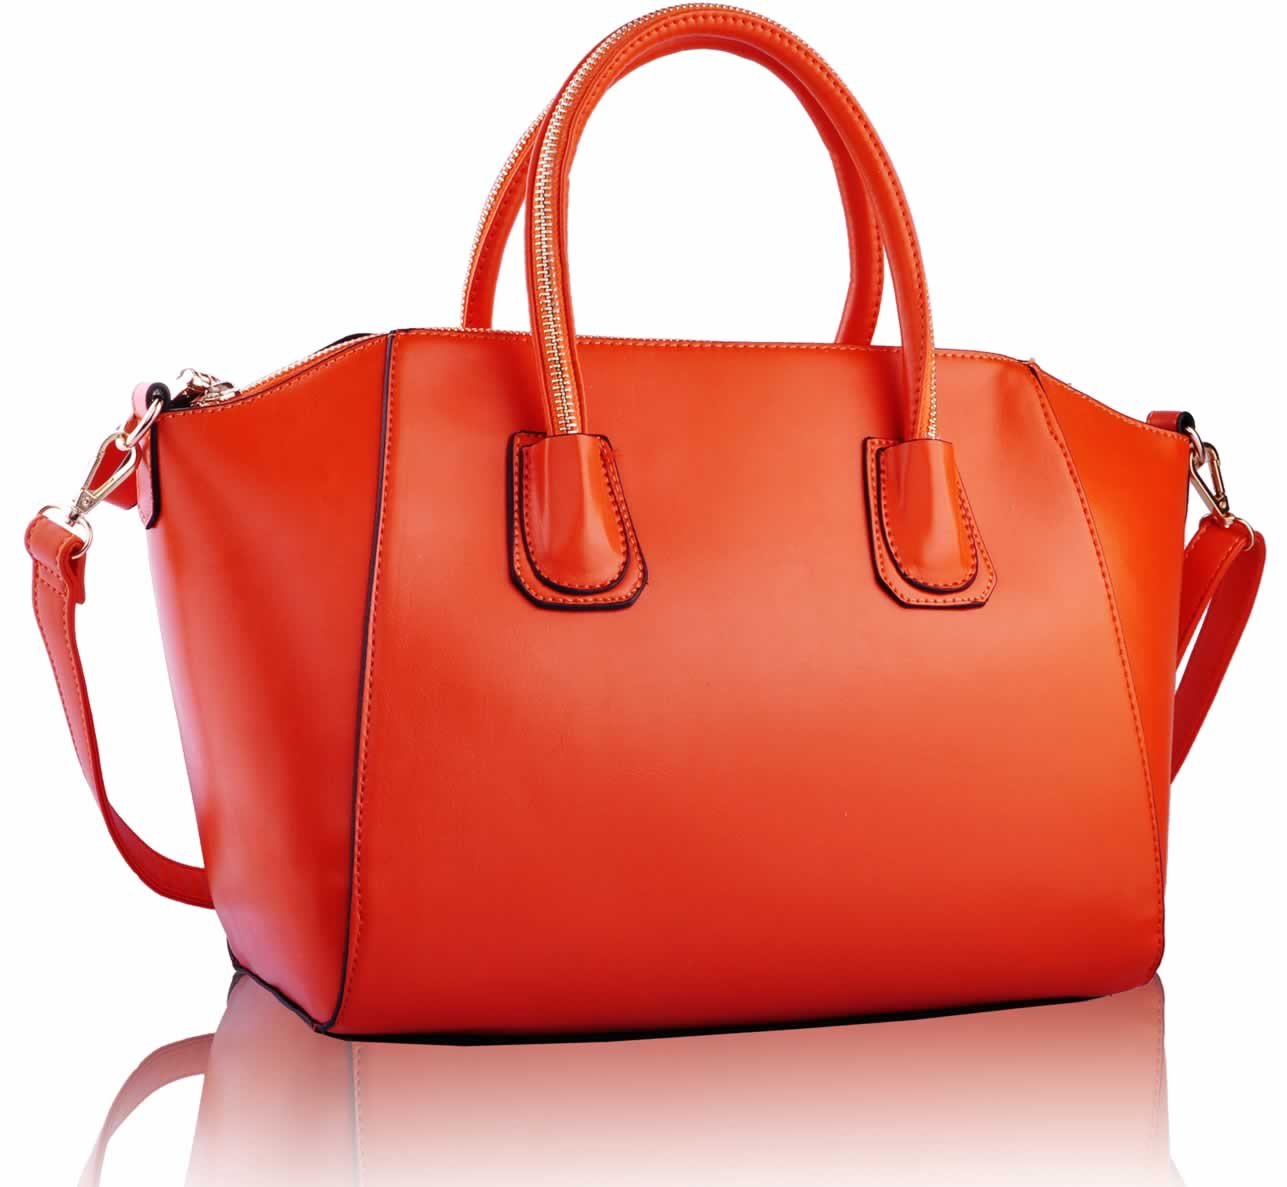 Wholesale Bags :: LS0060 - Orange Satchel Handbag - Ladies handbags ...